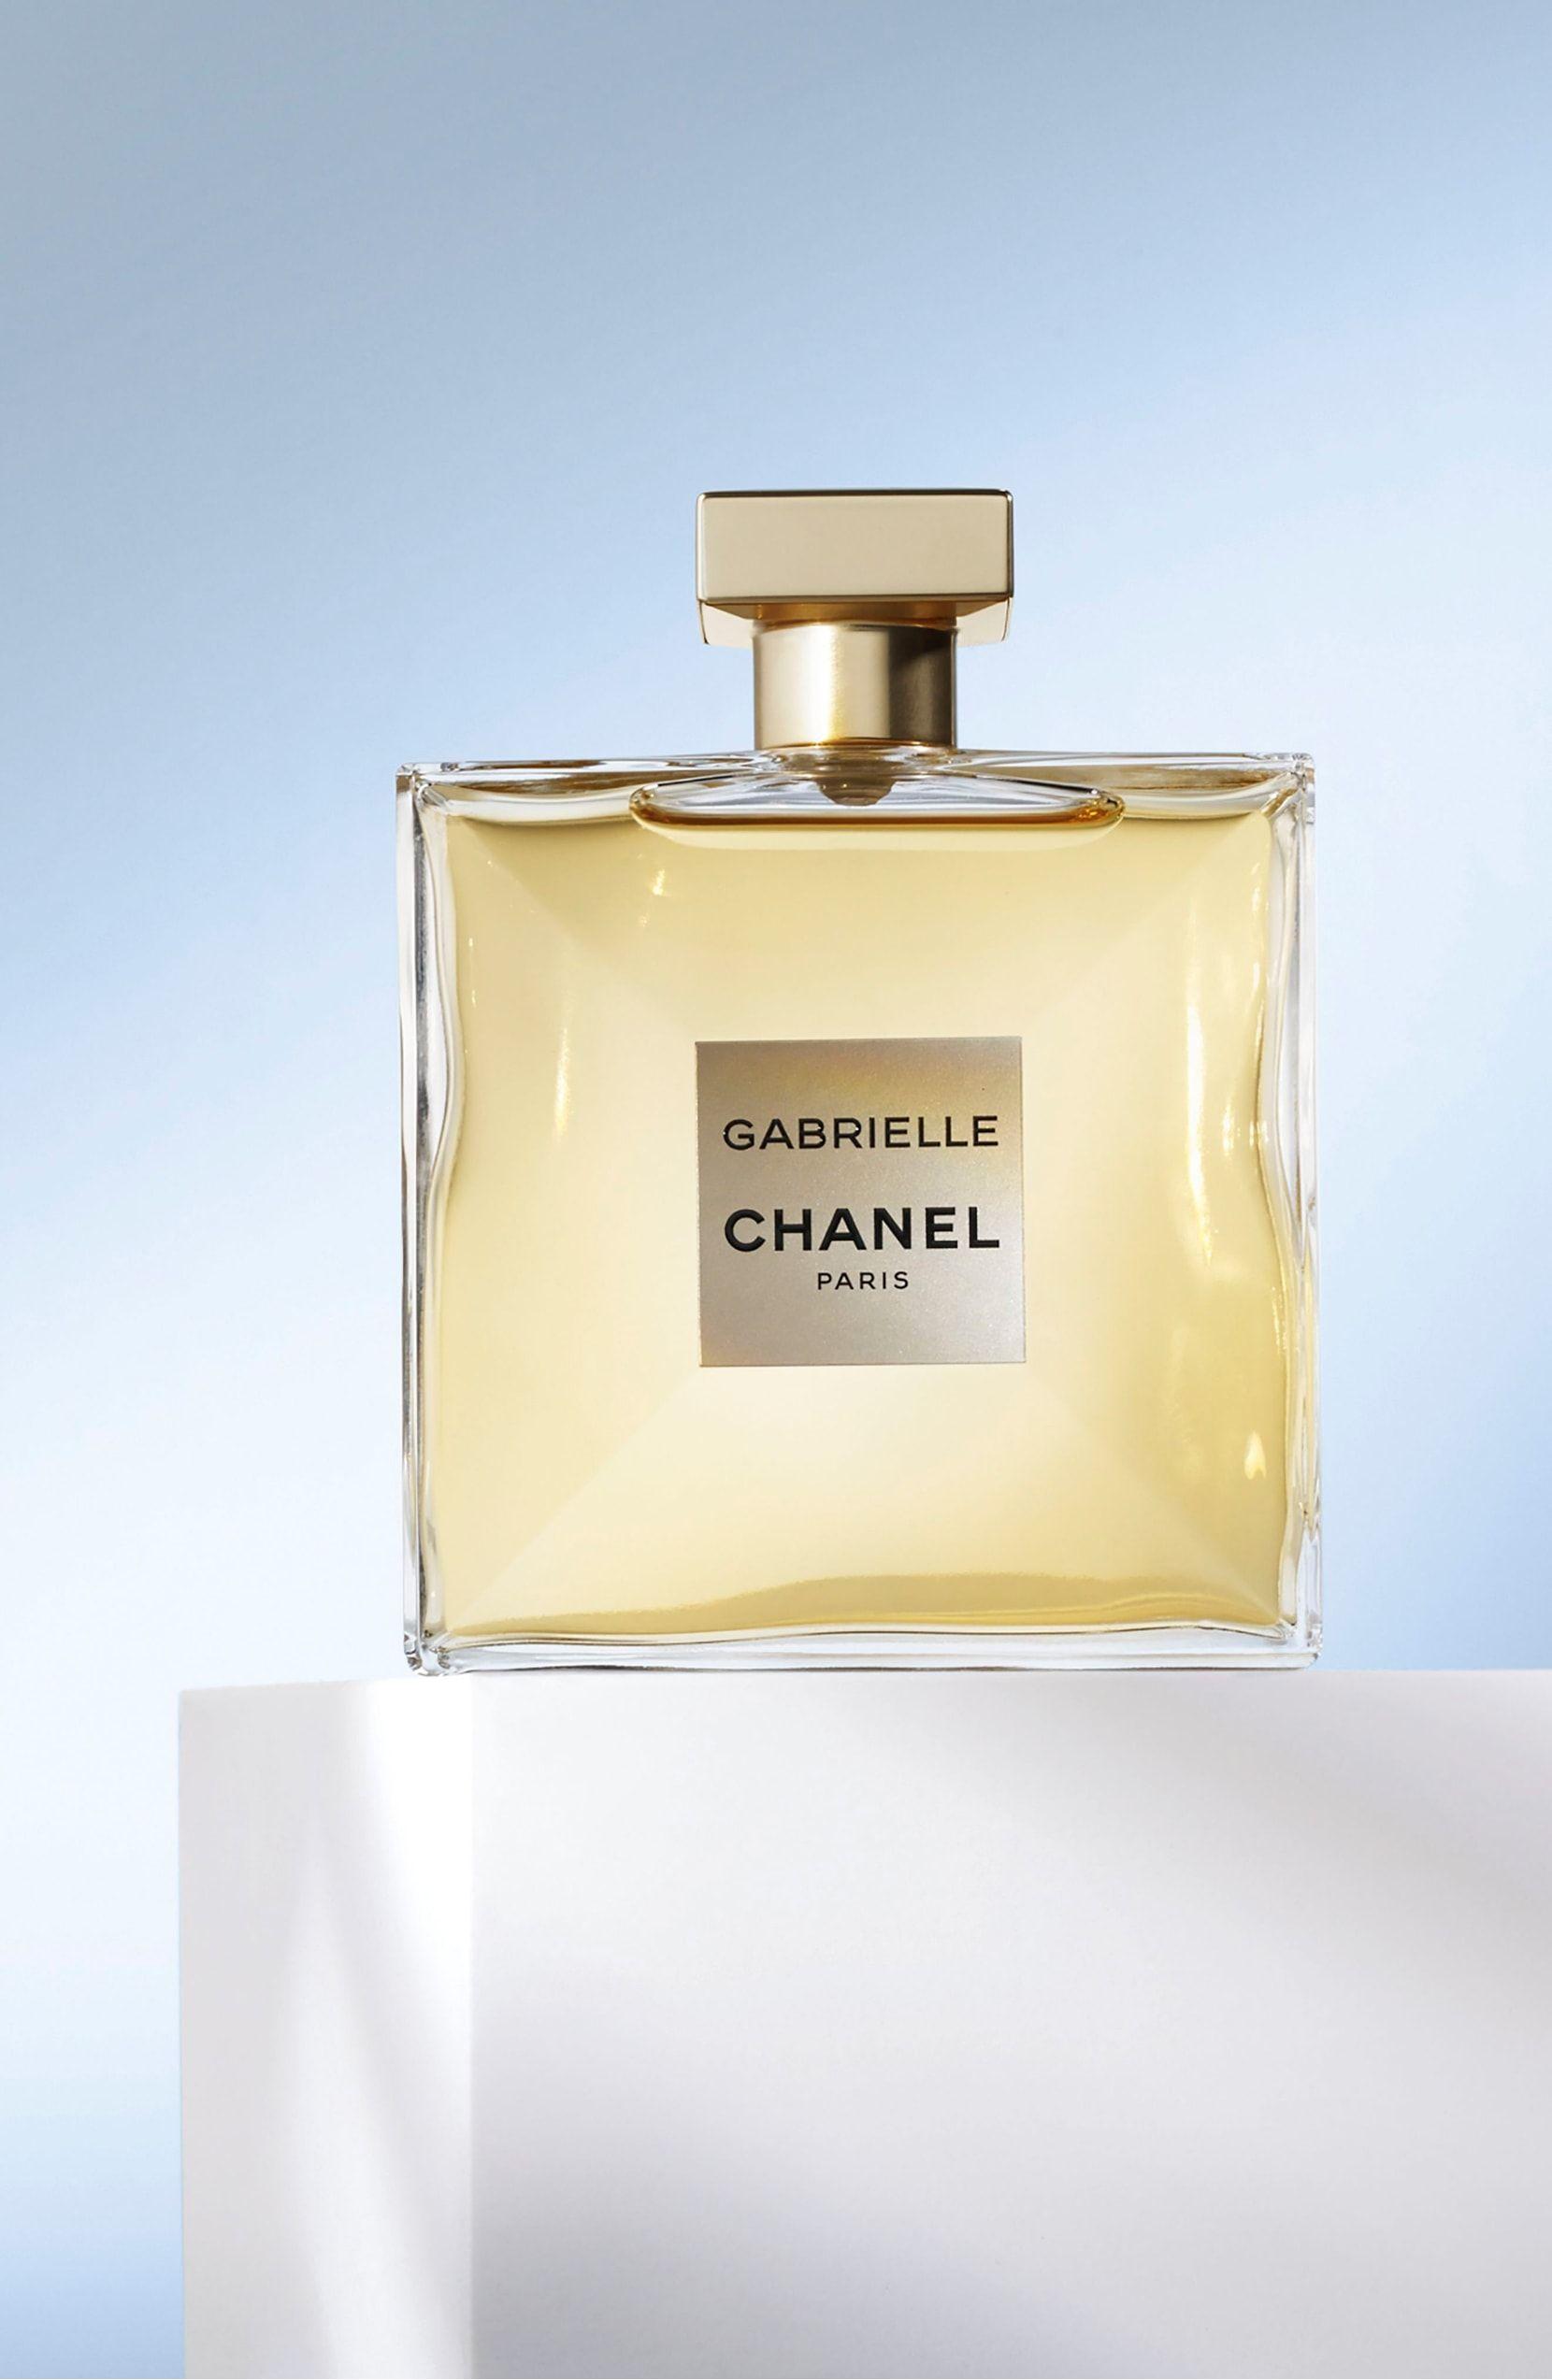 Gabrielle Chanel Paris Logo - CHANEL GABRIELLE CHANEL Eau de Parfum Spray | Nordstrom